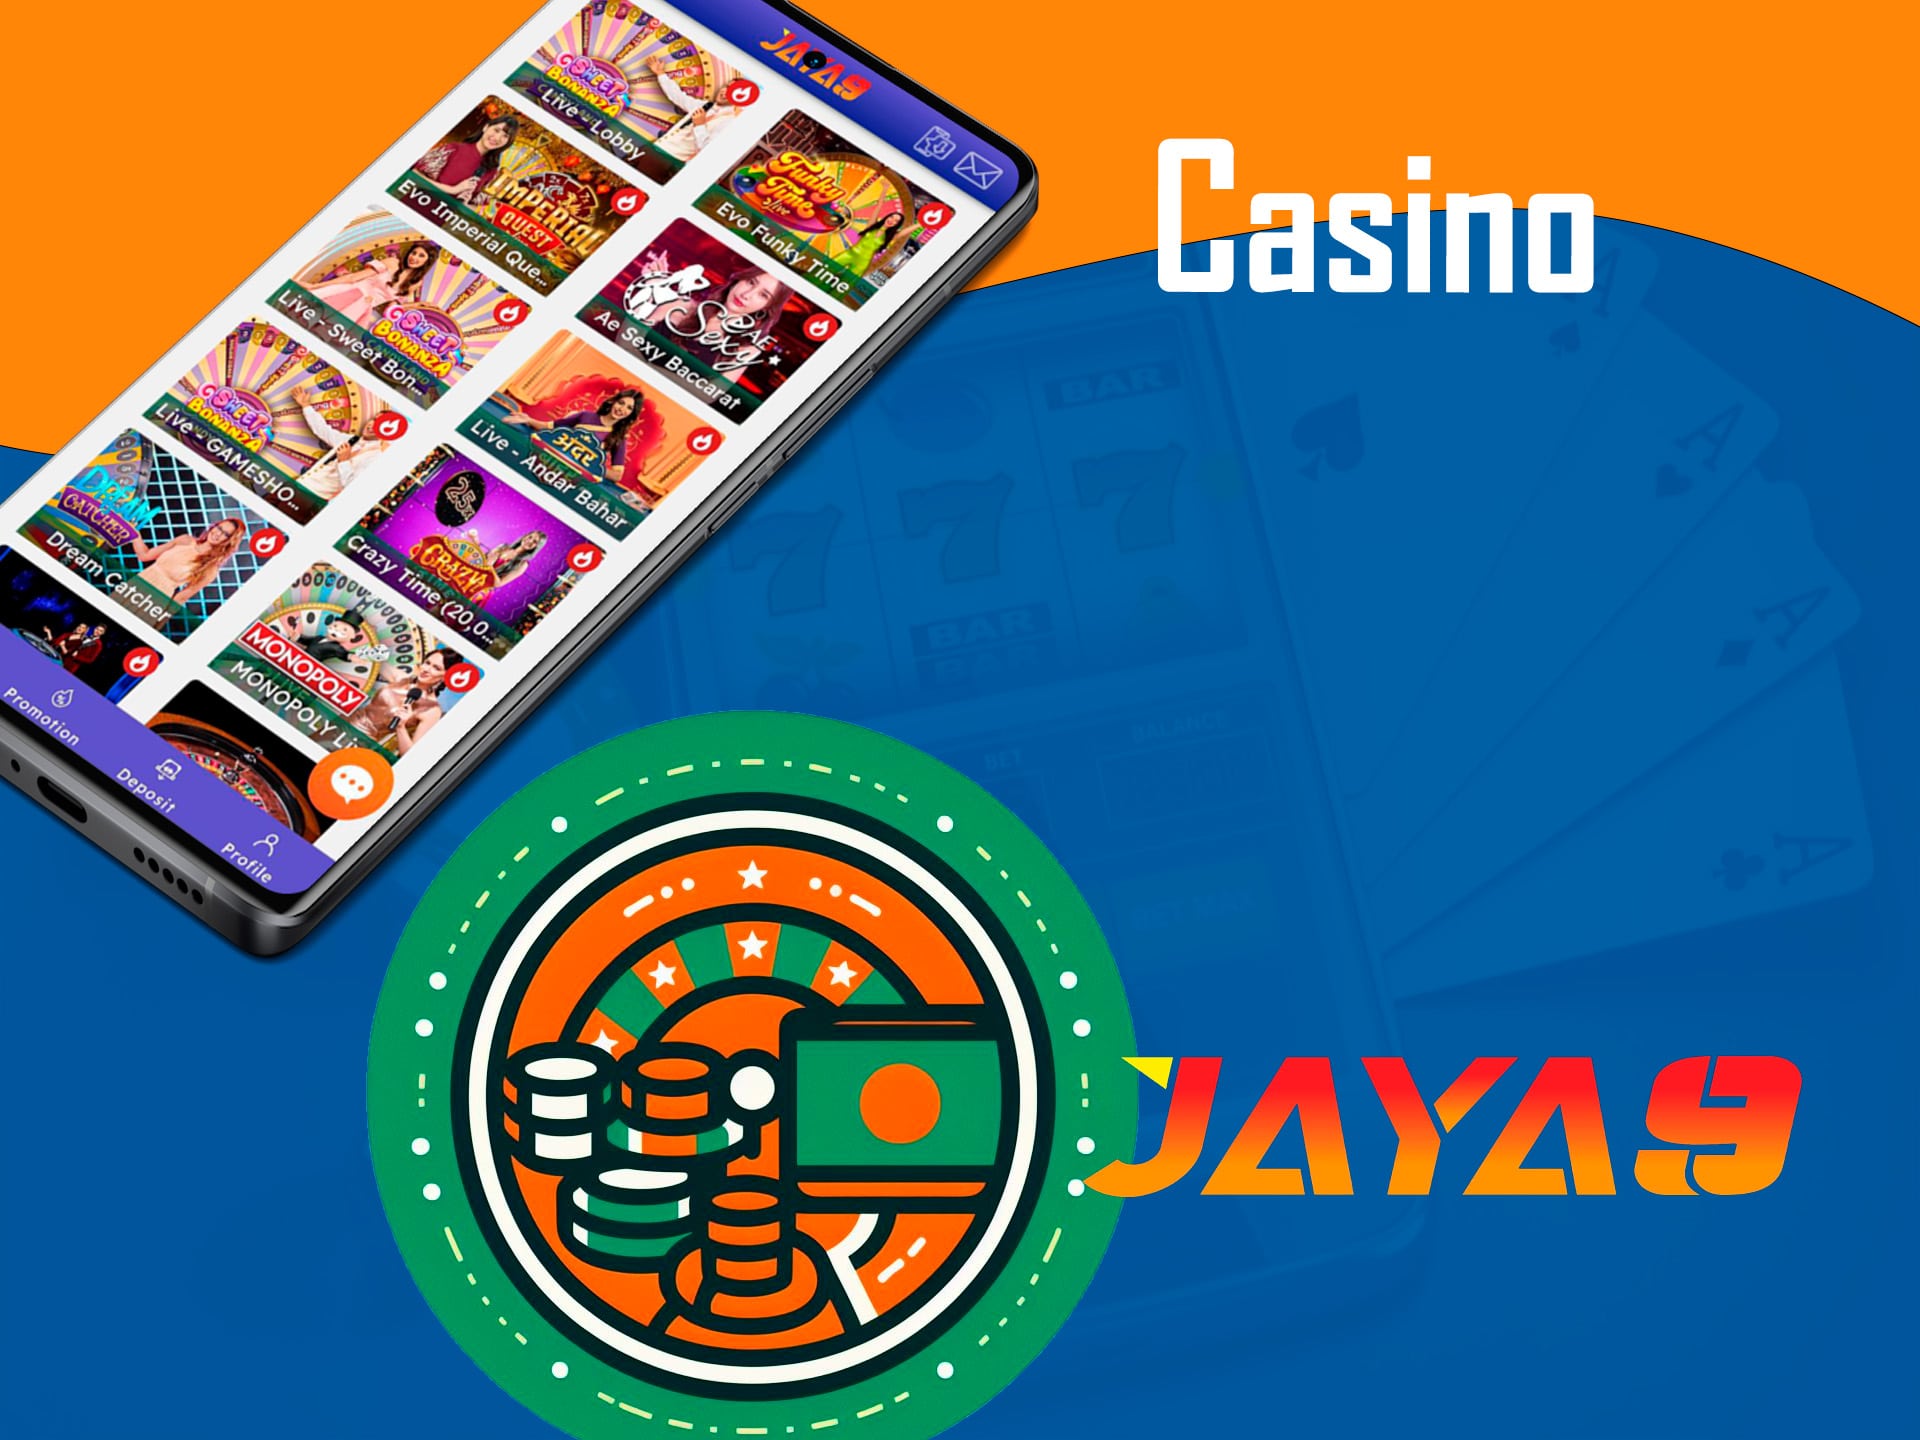 jaya9 online casino